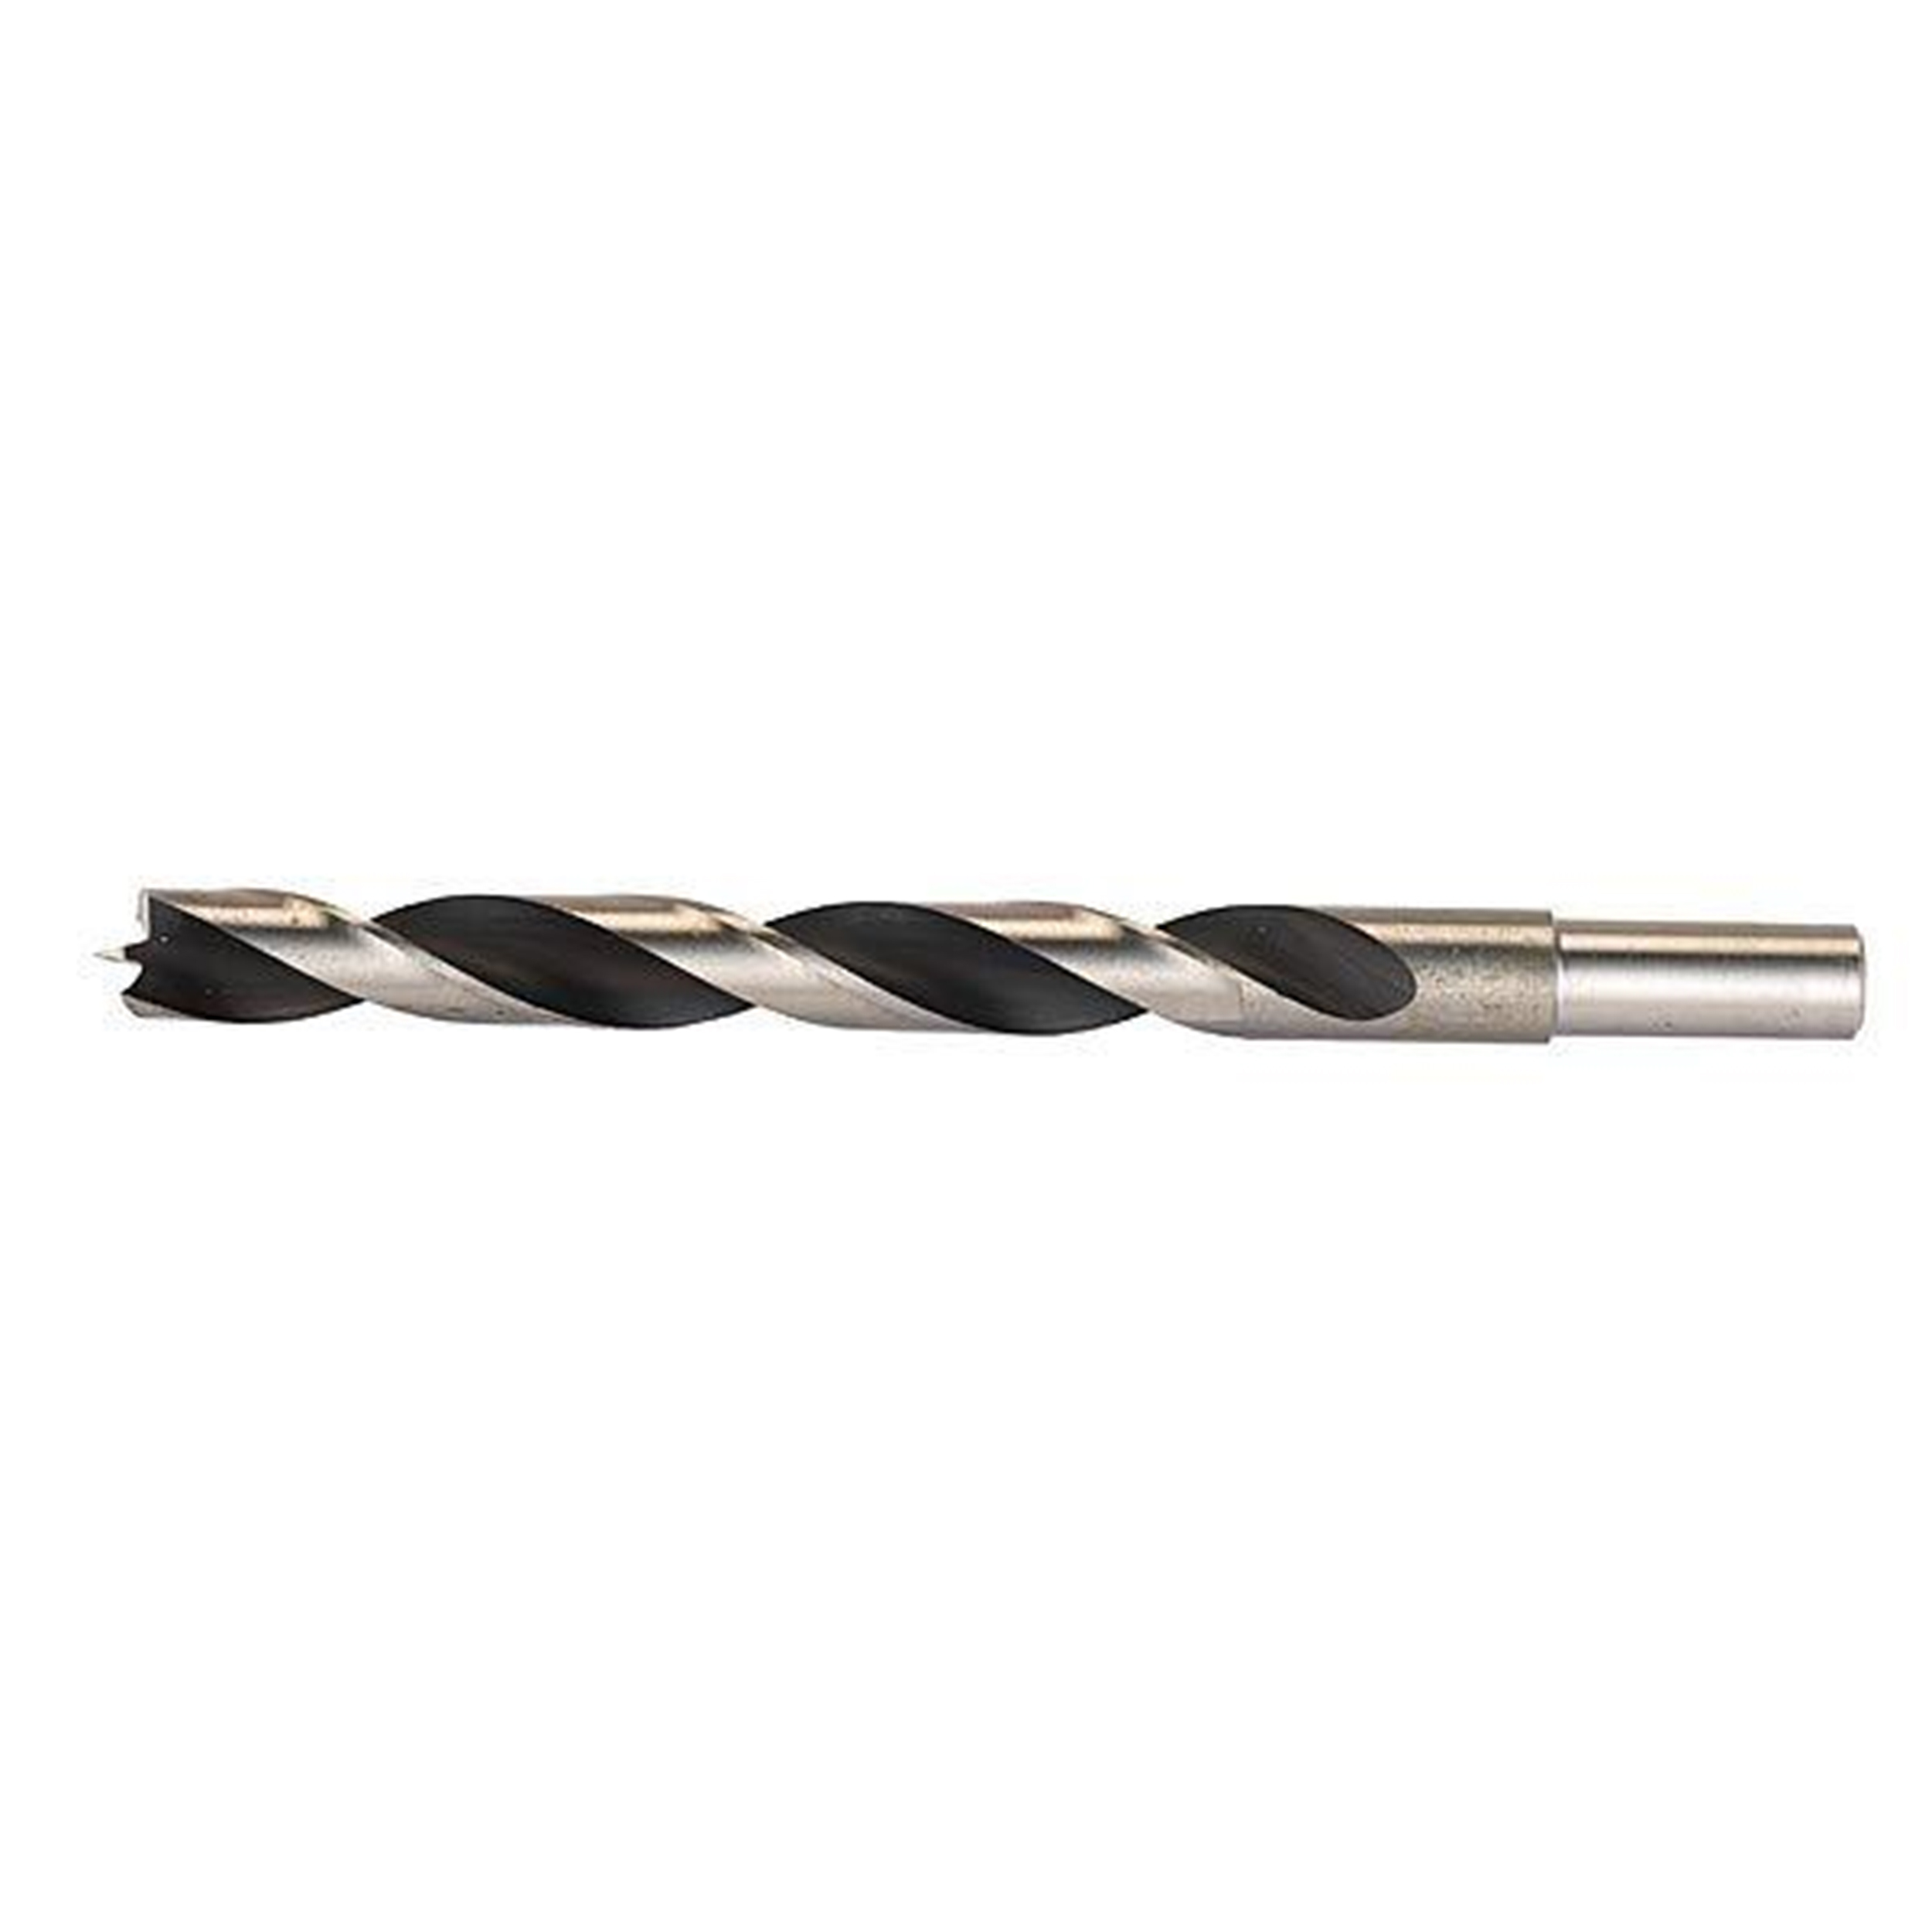 7/16-inch Chrome-vanadium Steel Brad Point Drill Bit